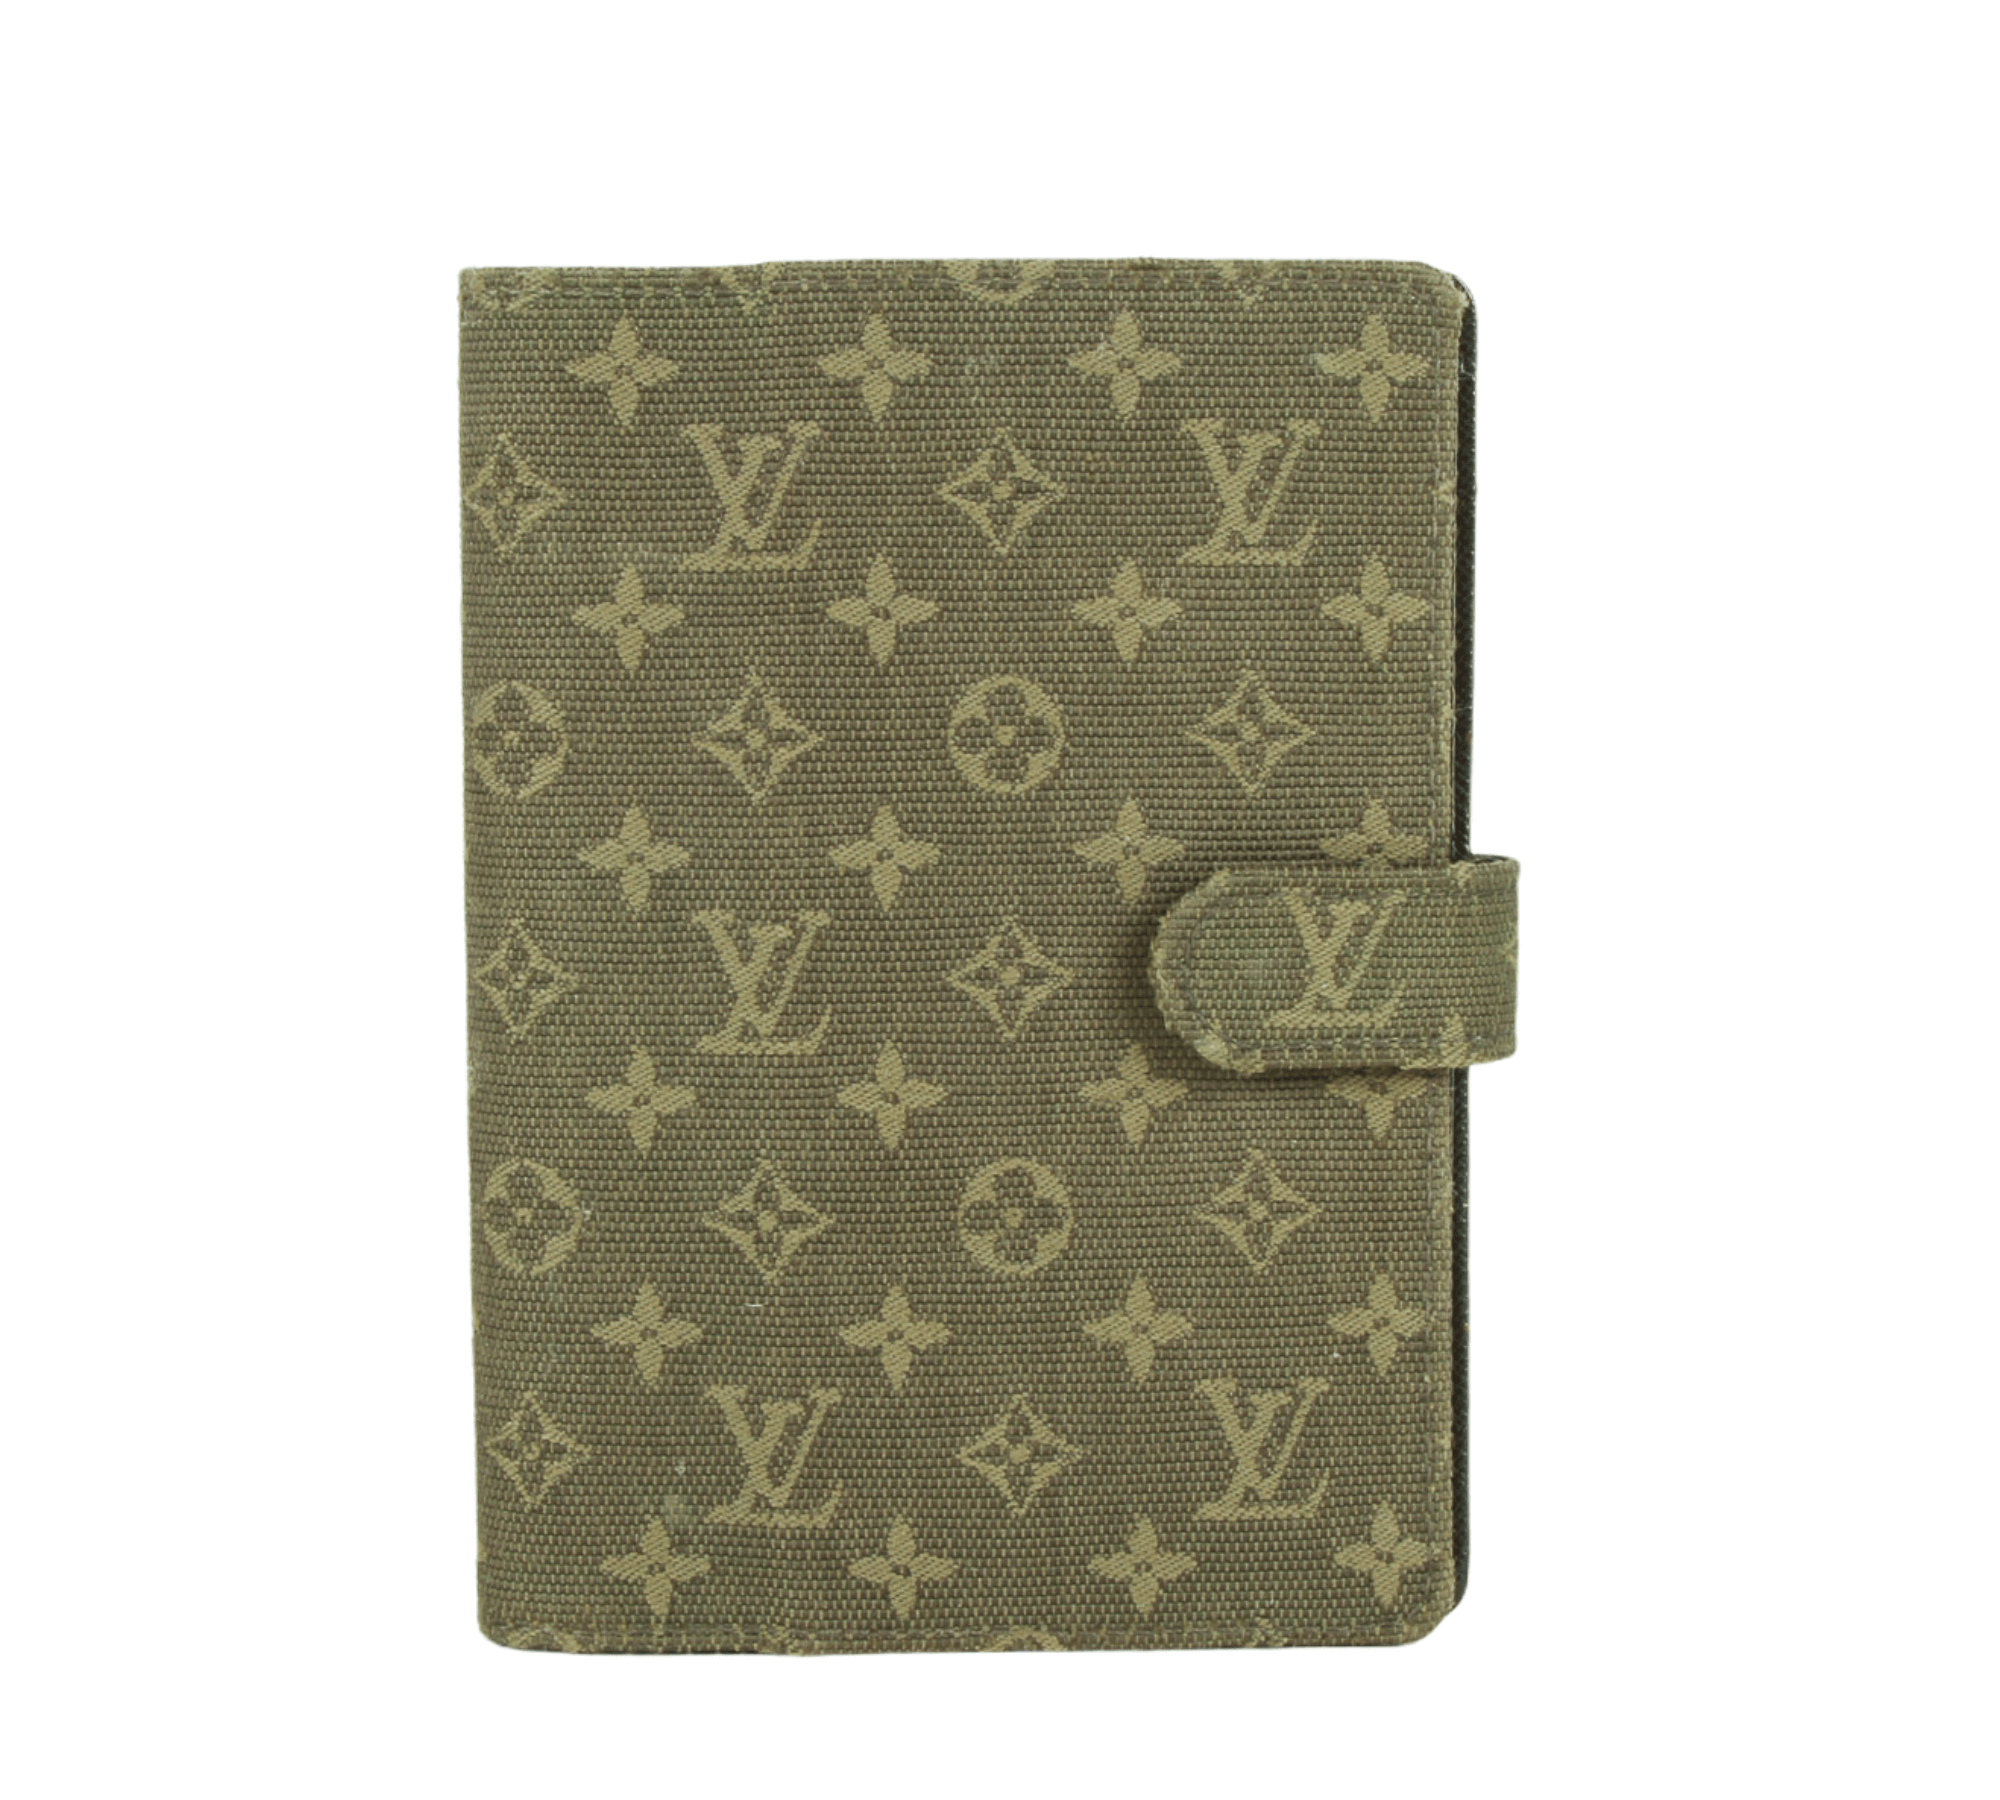 Authentic Louis Vuitton Green Mini Lin Agenda PM notebook cover